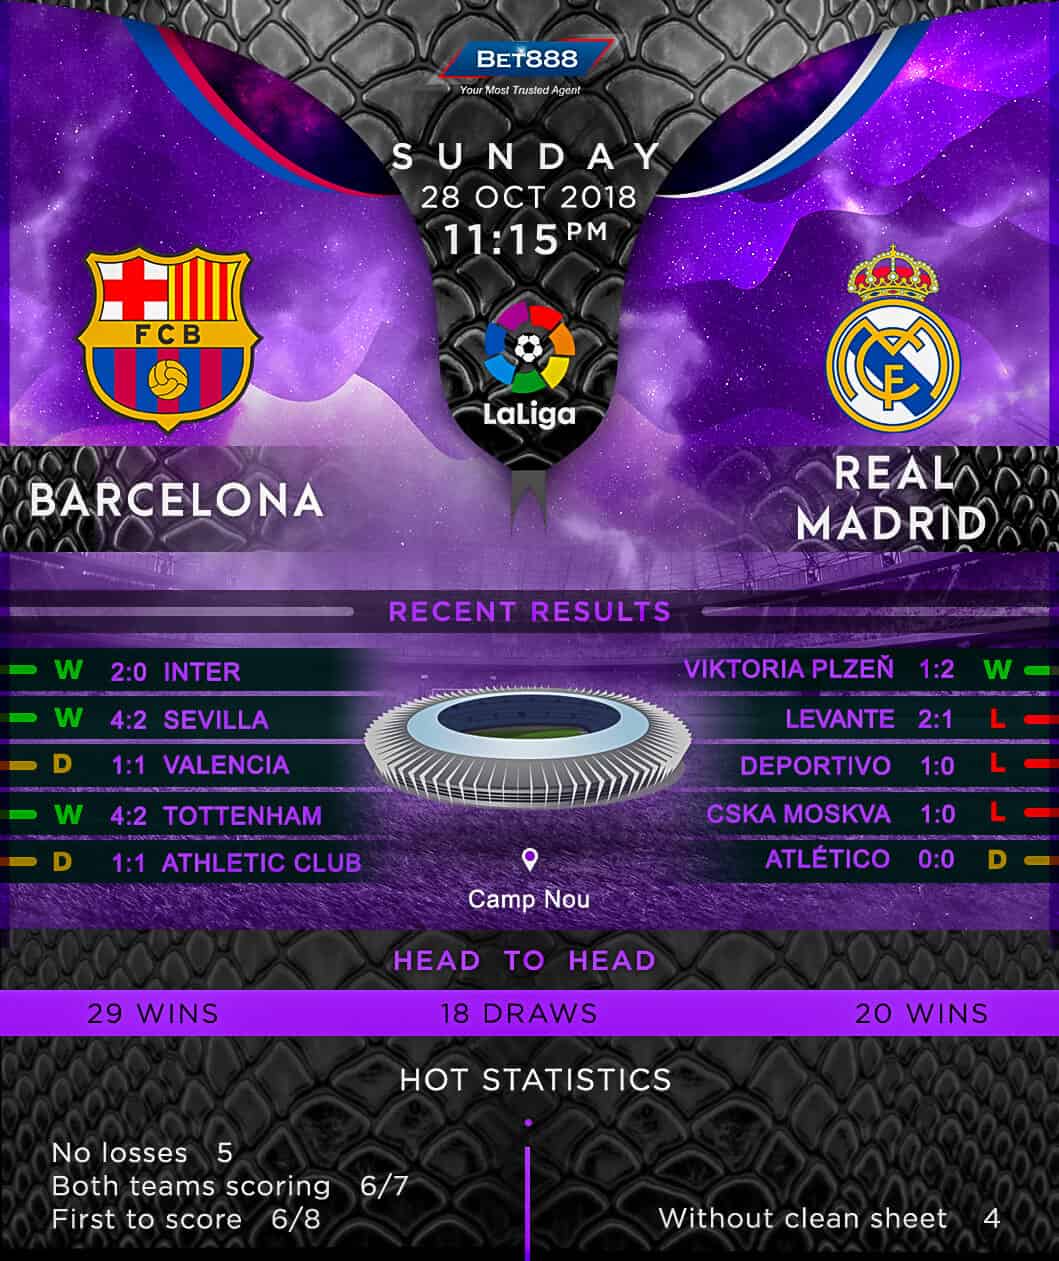 Barcelona vs Real Madrid 28/10/18